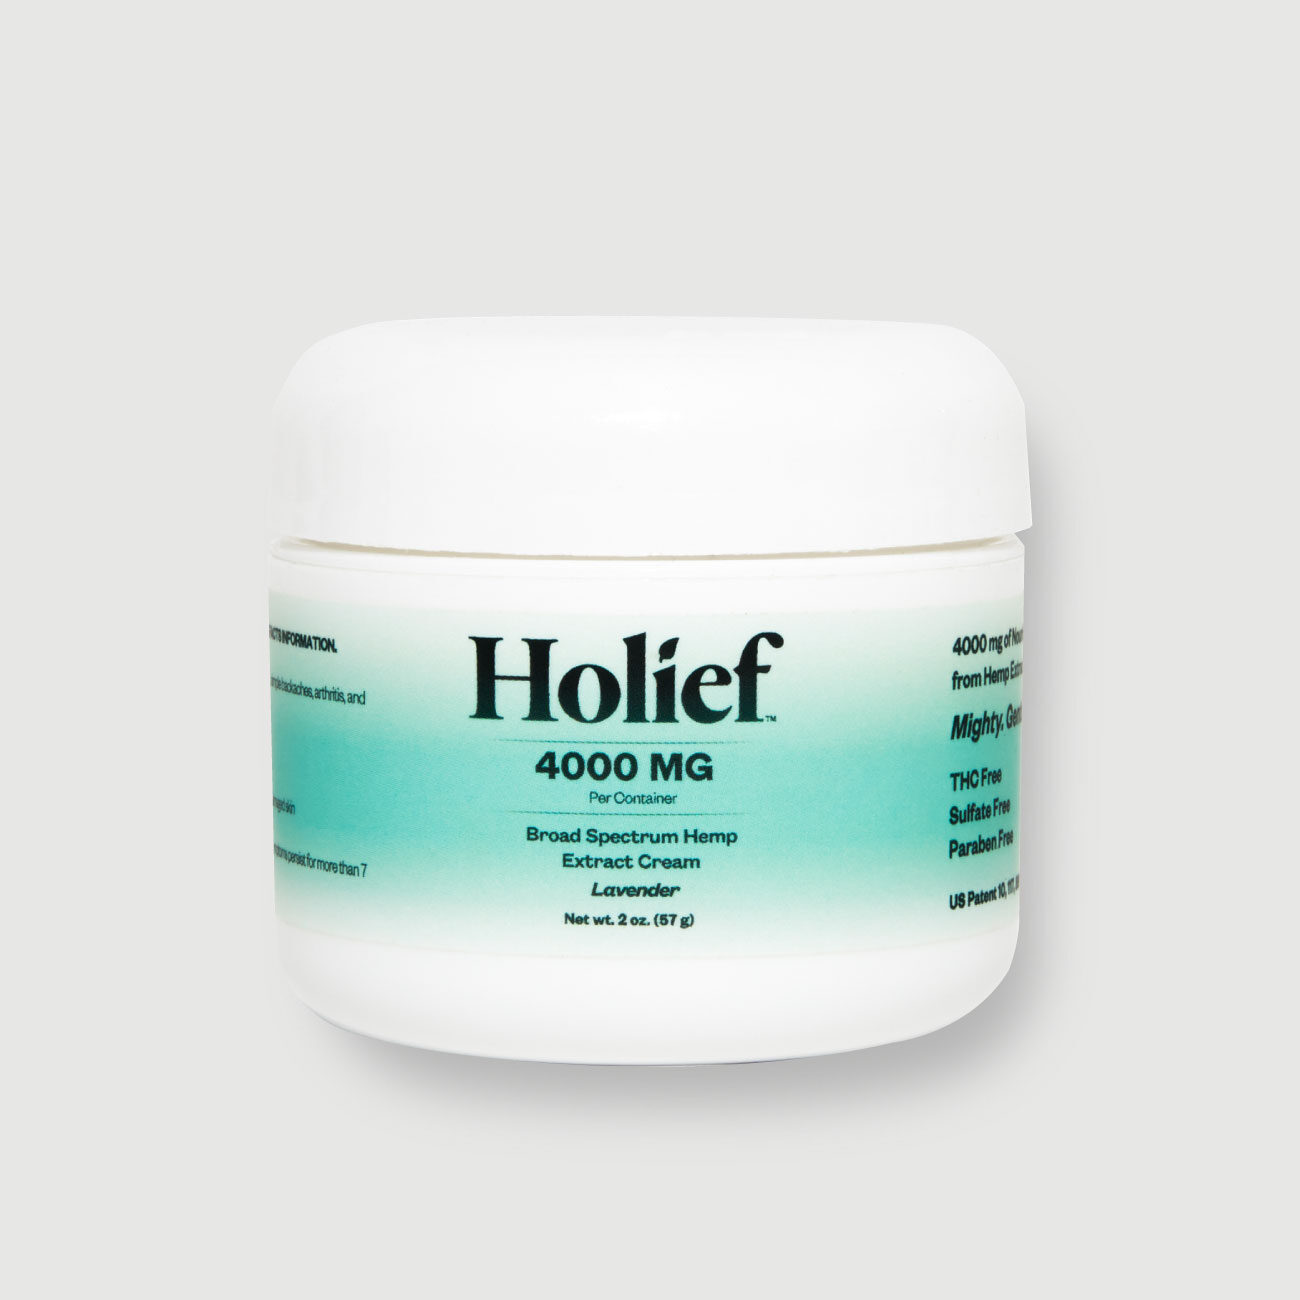 Holi-Wonder Muscle + Skin Relief Cream